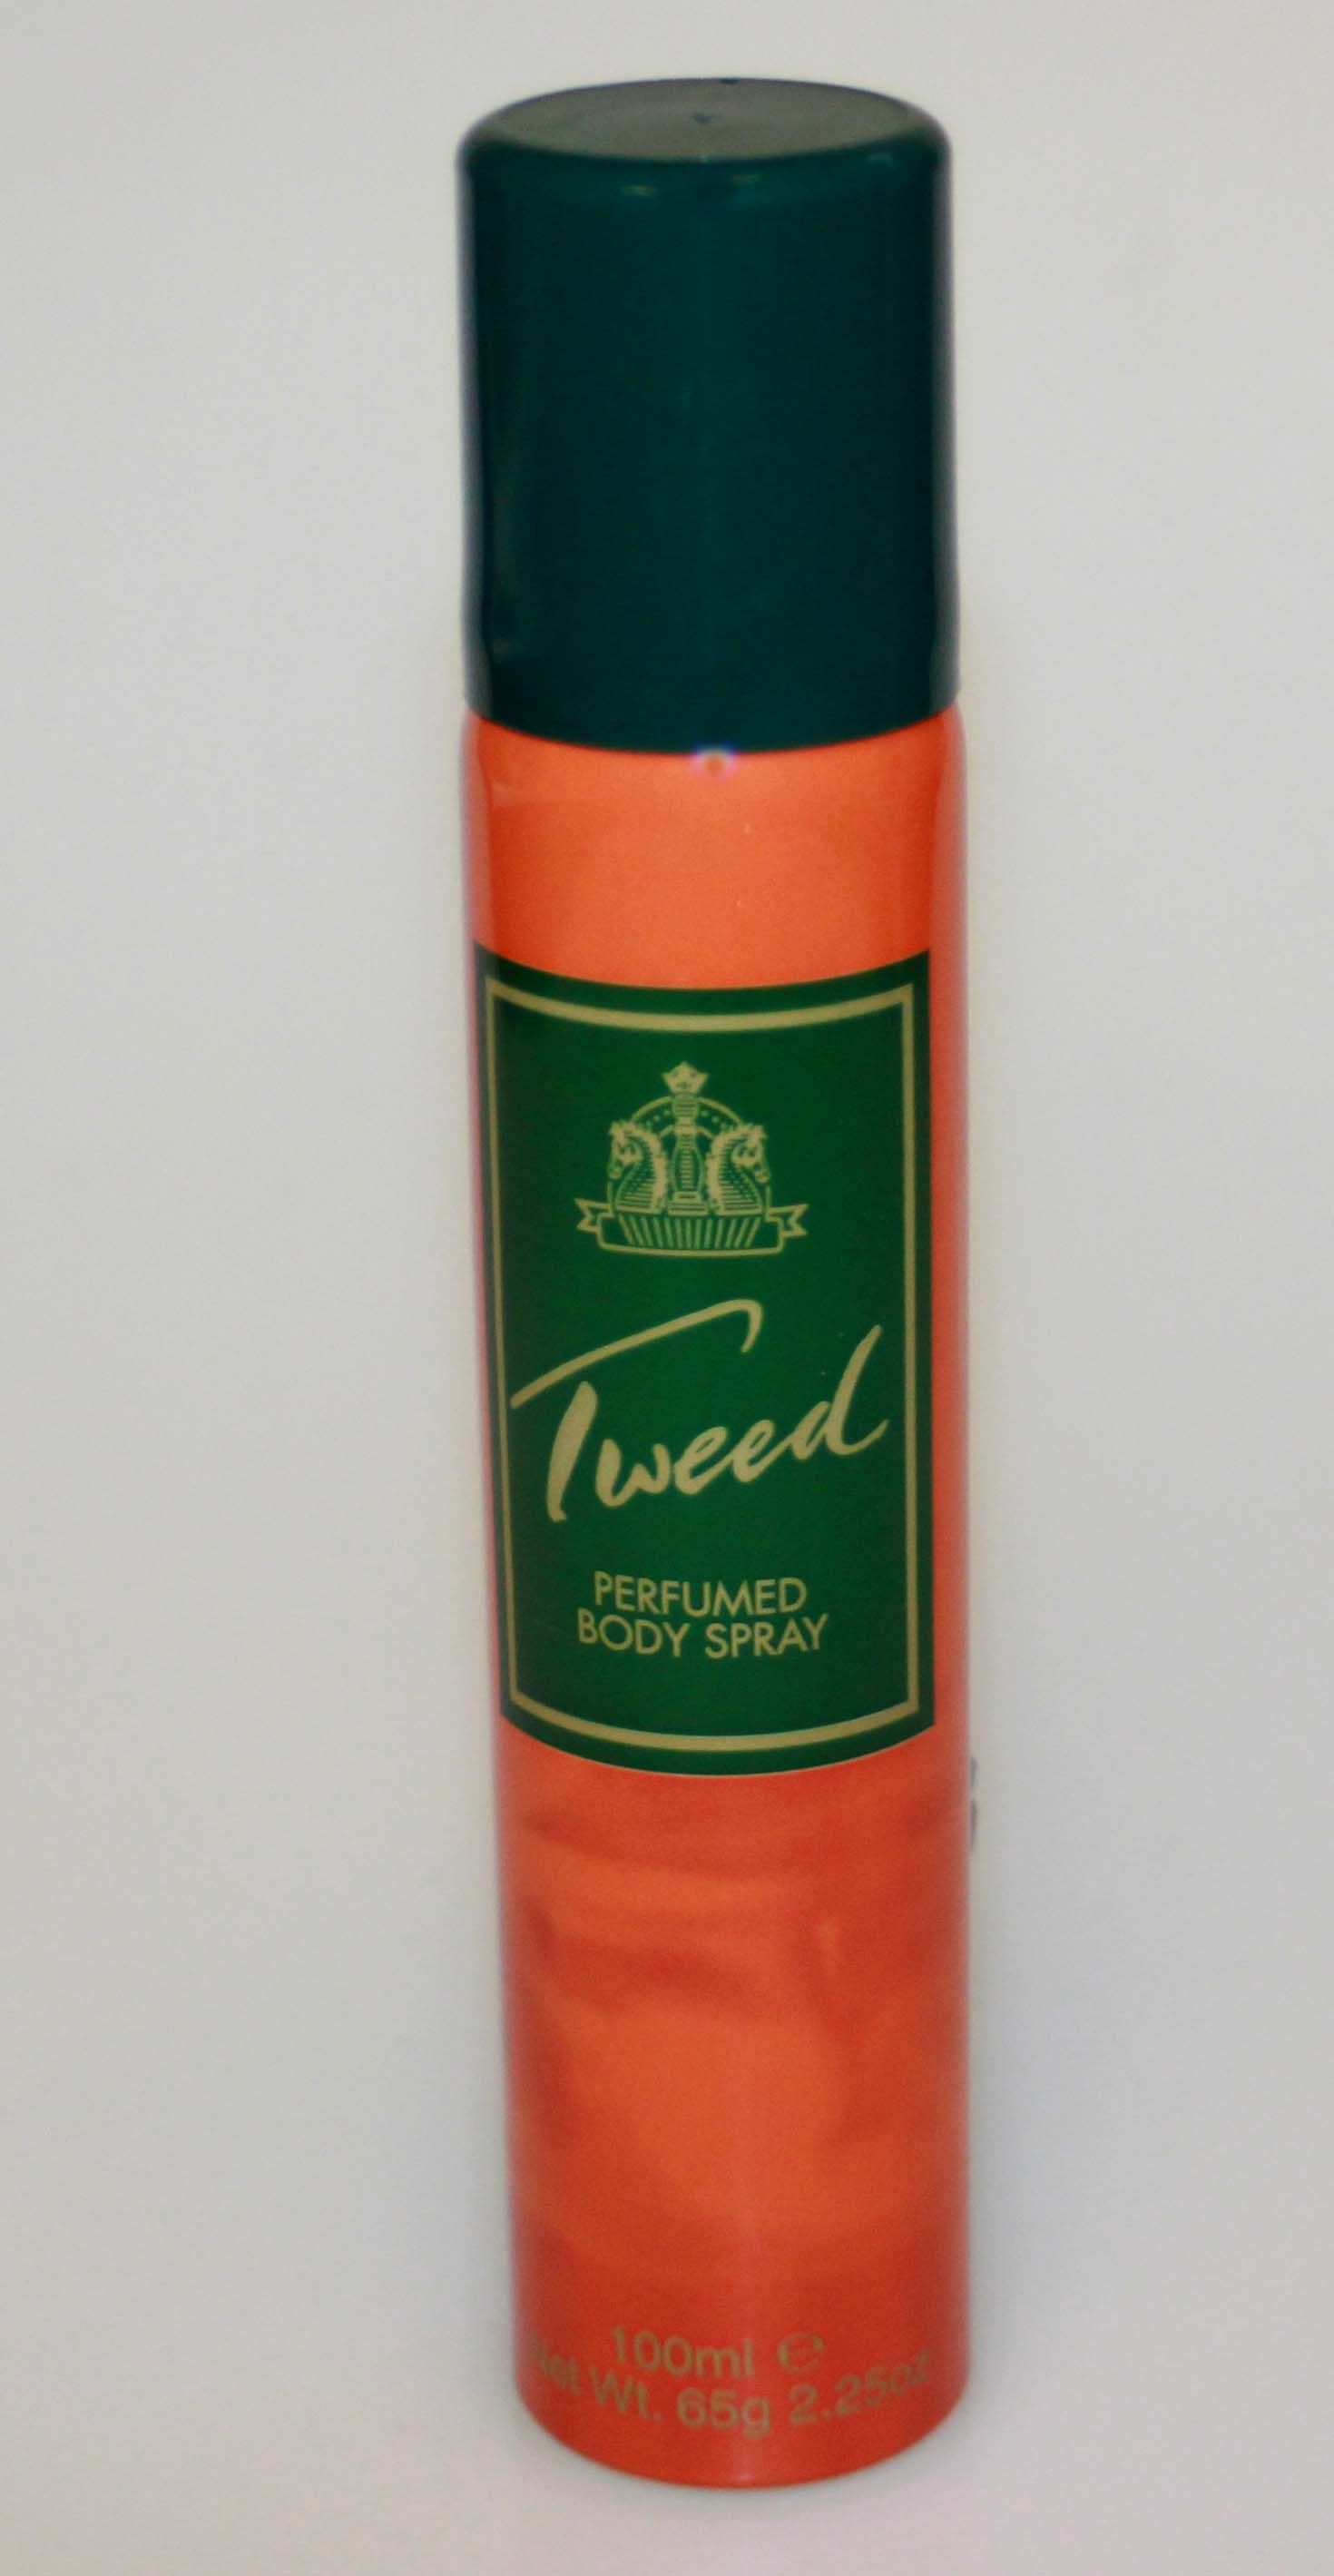 Tweed Perfumed Body Spray 75ml